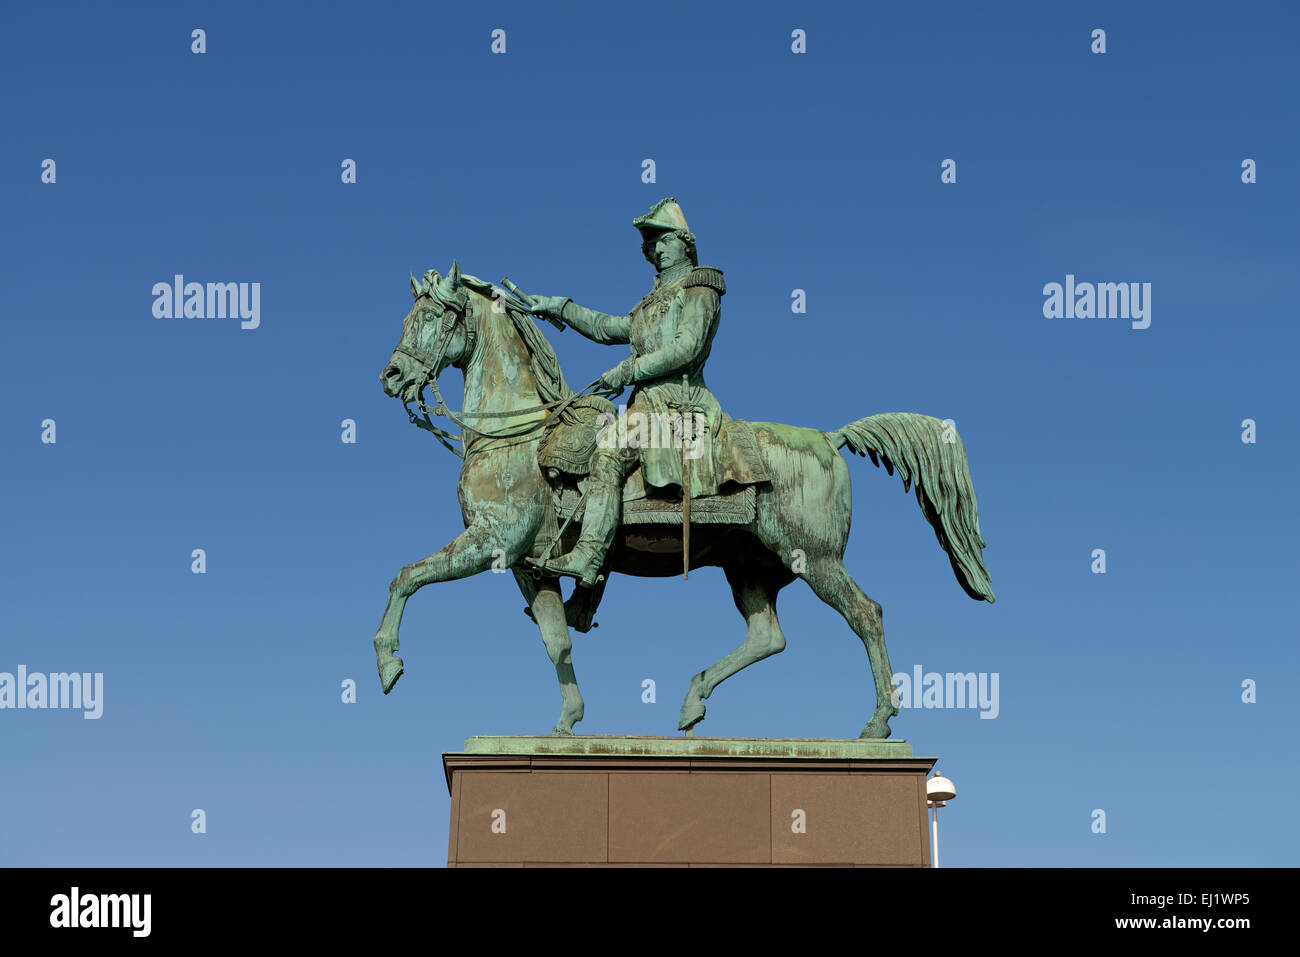 Statue of King Charles XIV John of Sweden, Bernadotte, Slusplan, Karl Johns Torg, Gamla Stan, Stockholm, Sweden Stock Photo